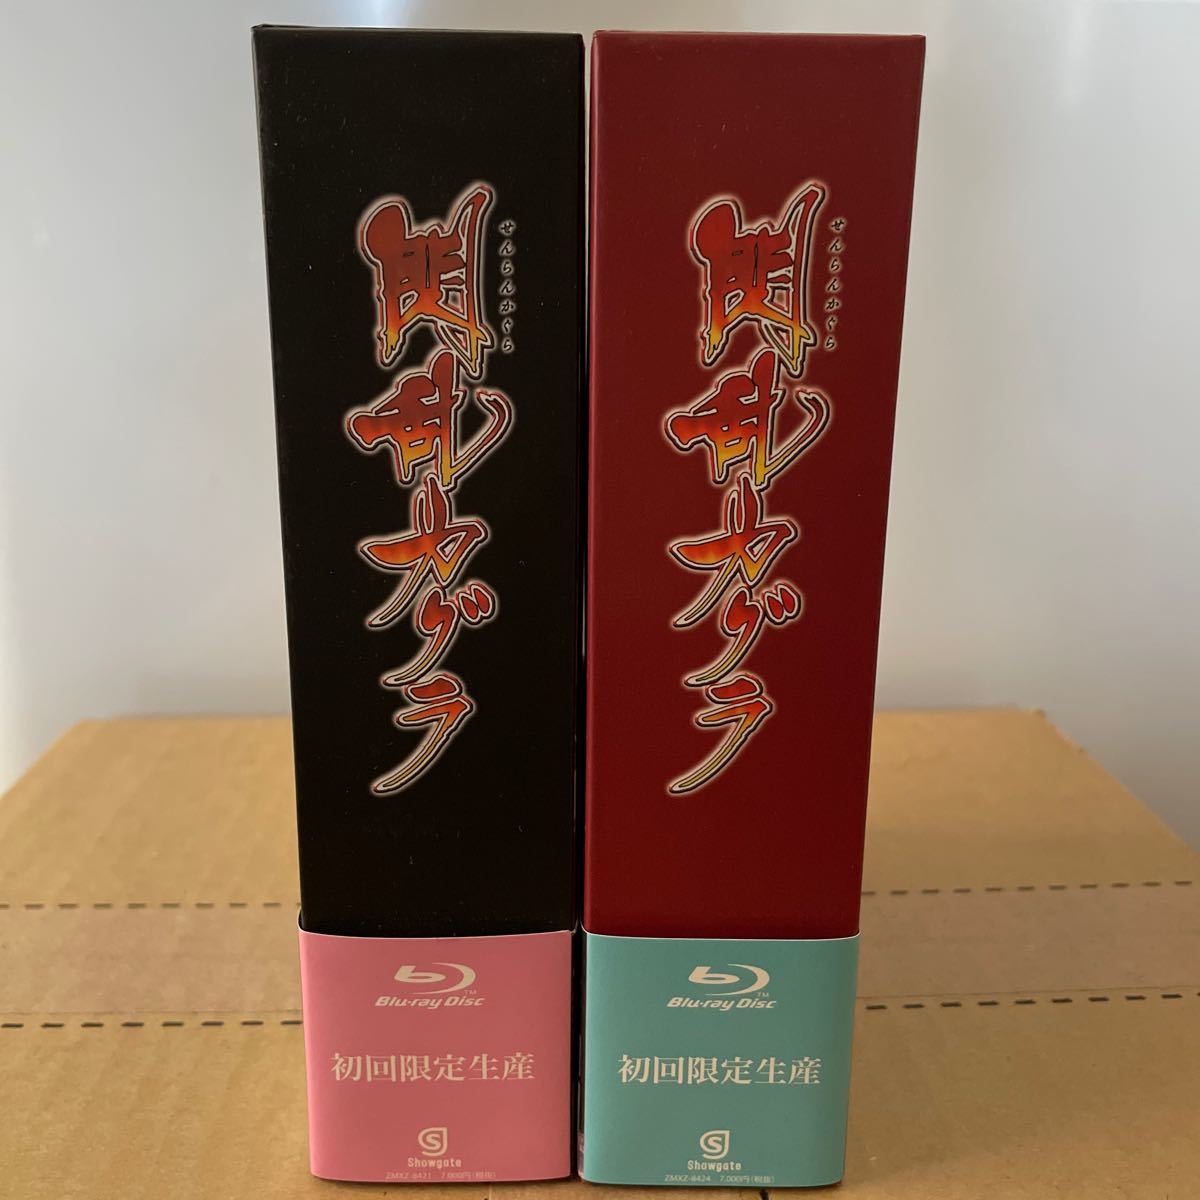 閃乱カグラBD-BOX全巻セット 初回限定生産版Blu-ray